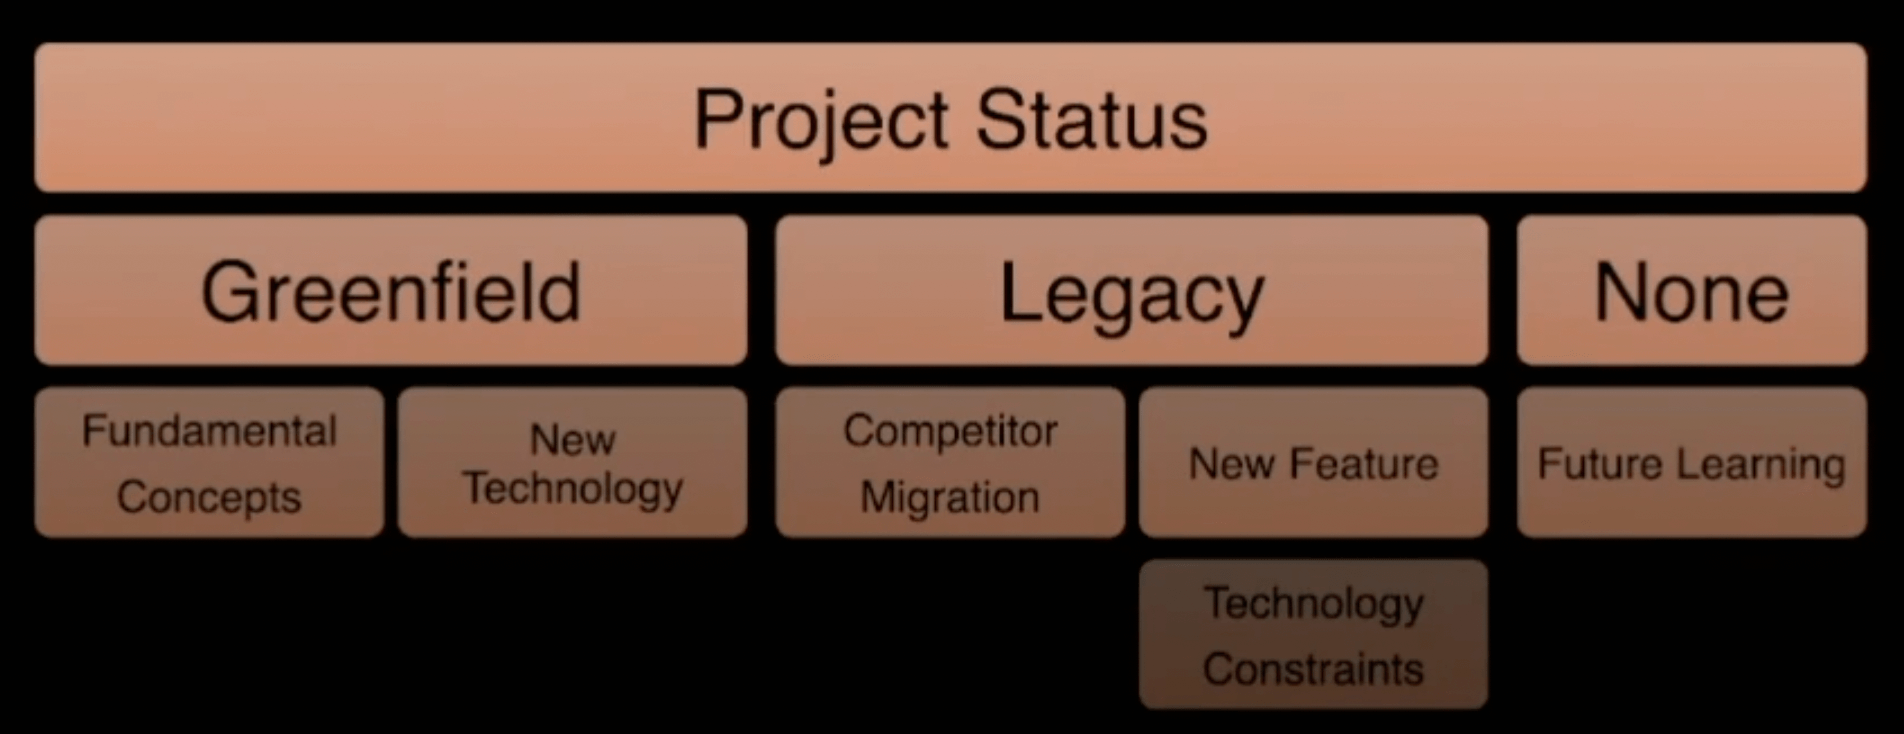 Decision matrix for project status